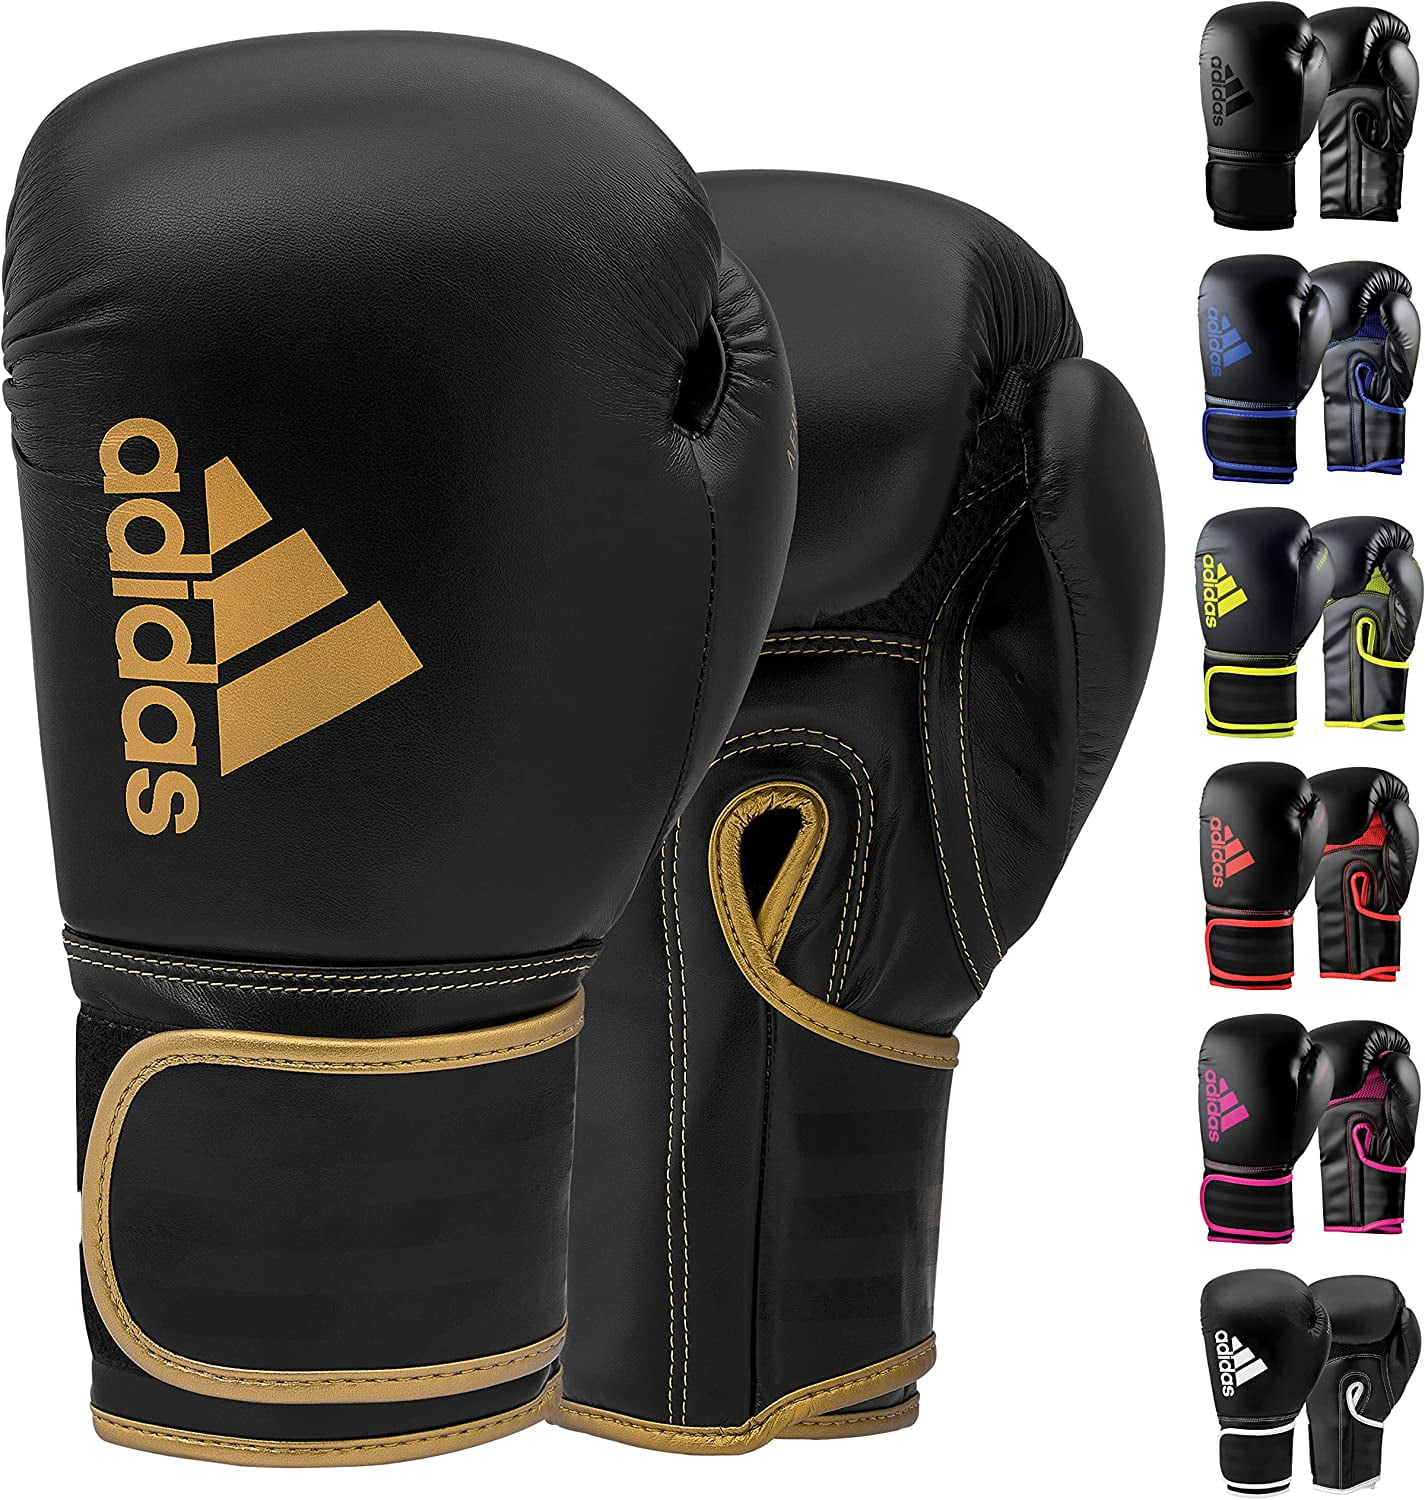 Adidas Hybrid 80 Boxing - Sparring for Women for oz Kids - Training Gloves Gloves Gloves, set 6 and Kickboxing pair - Black/Gold, Men